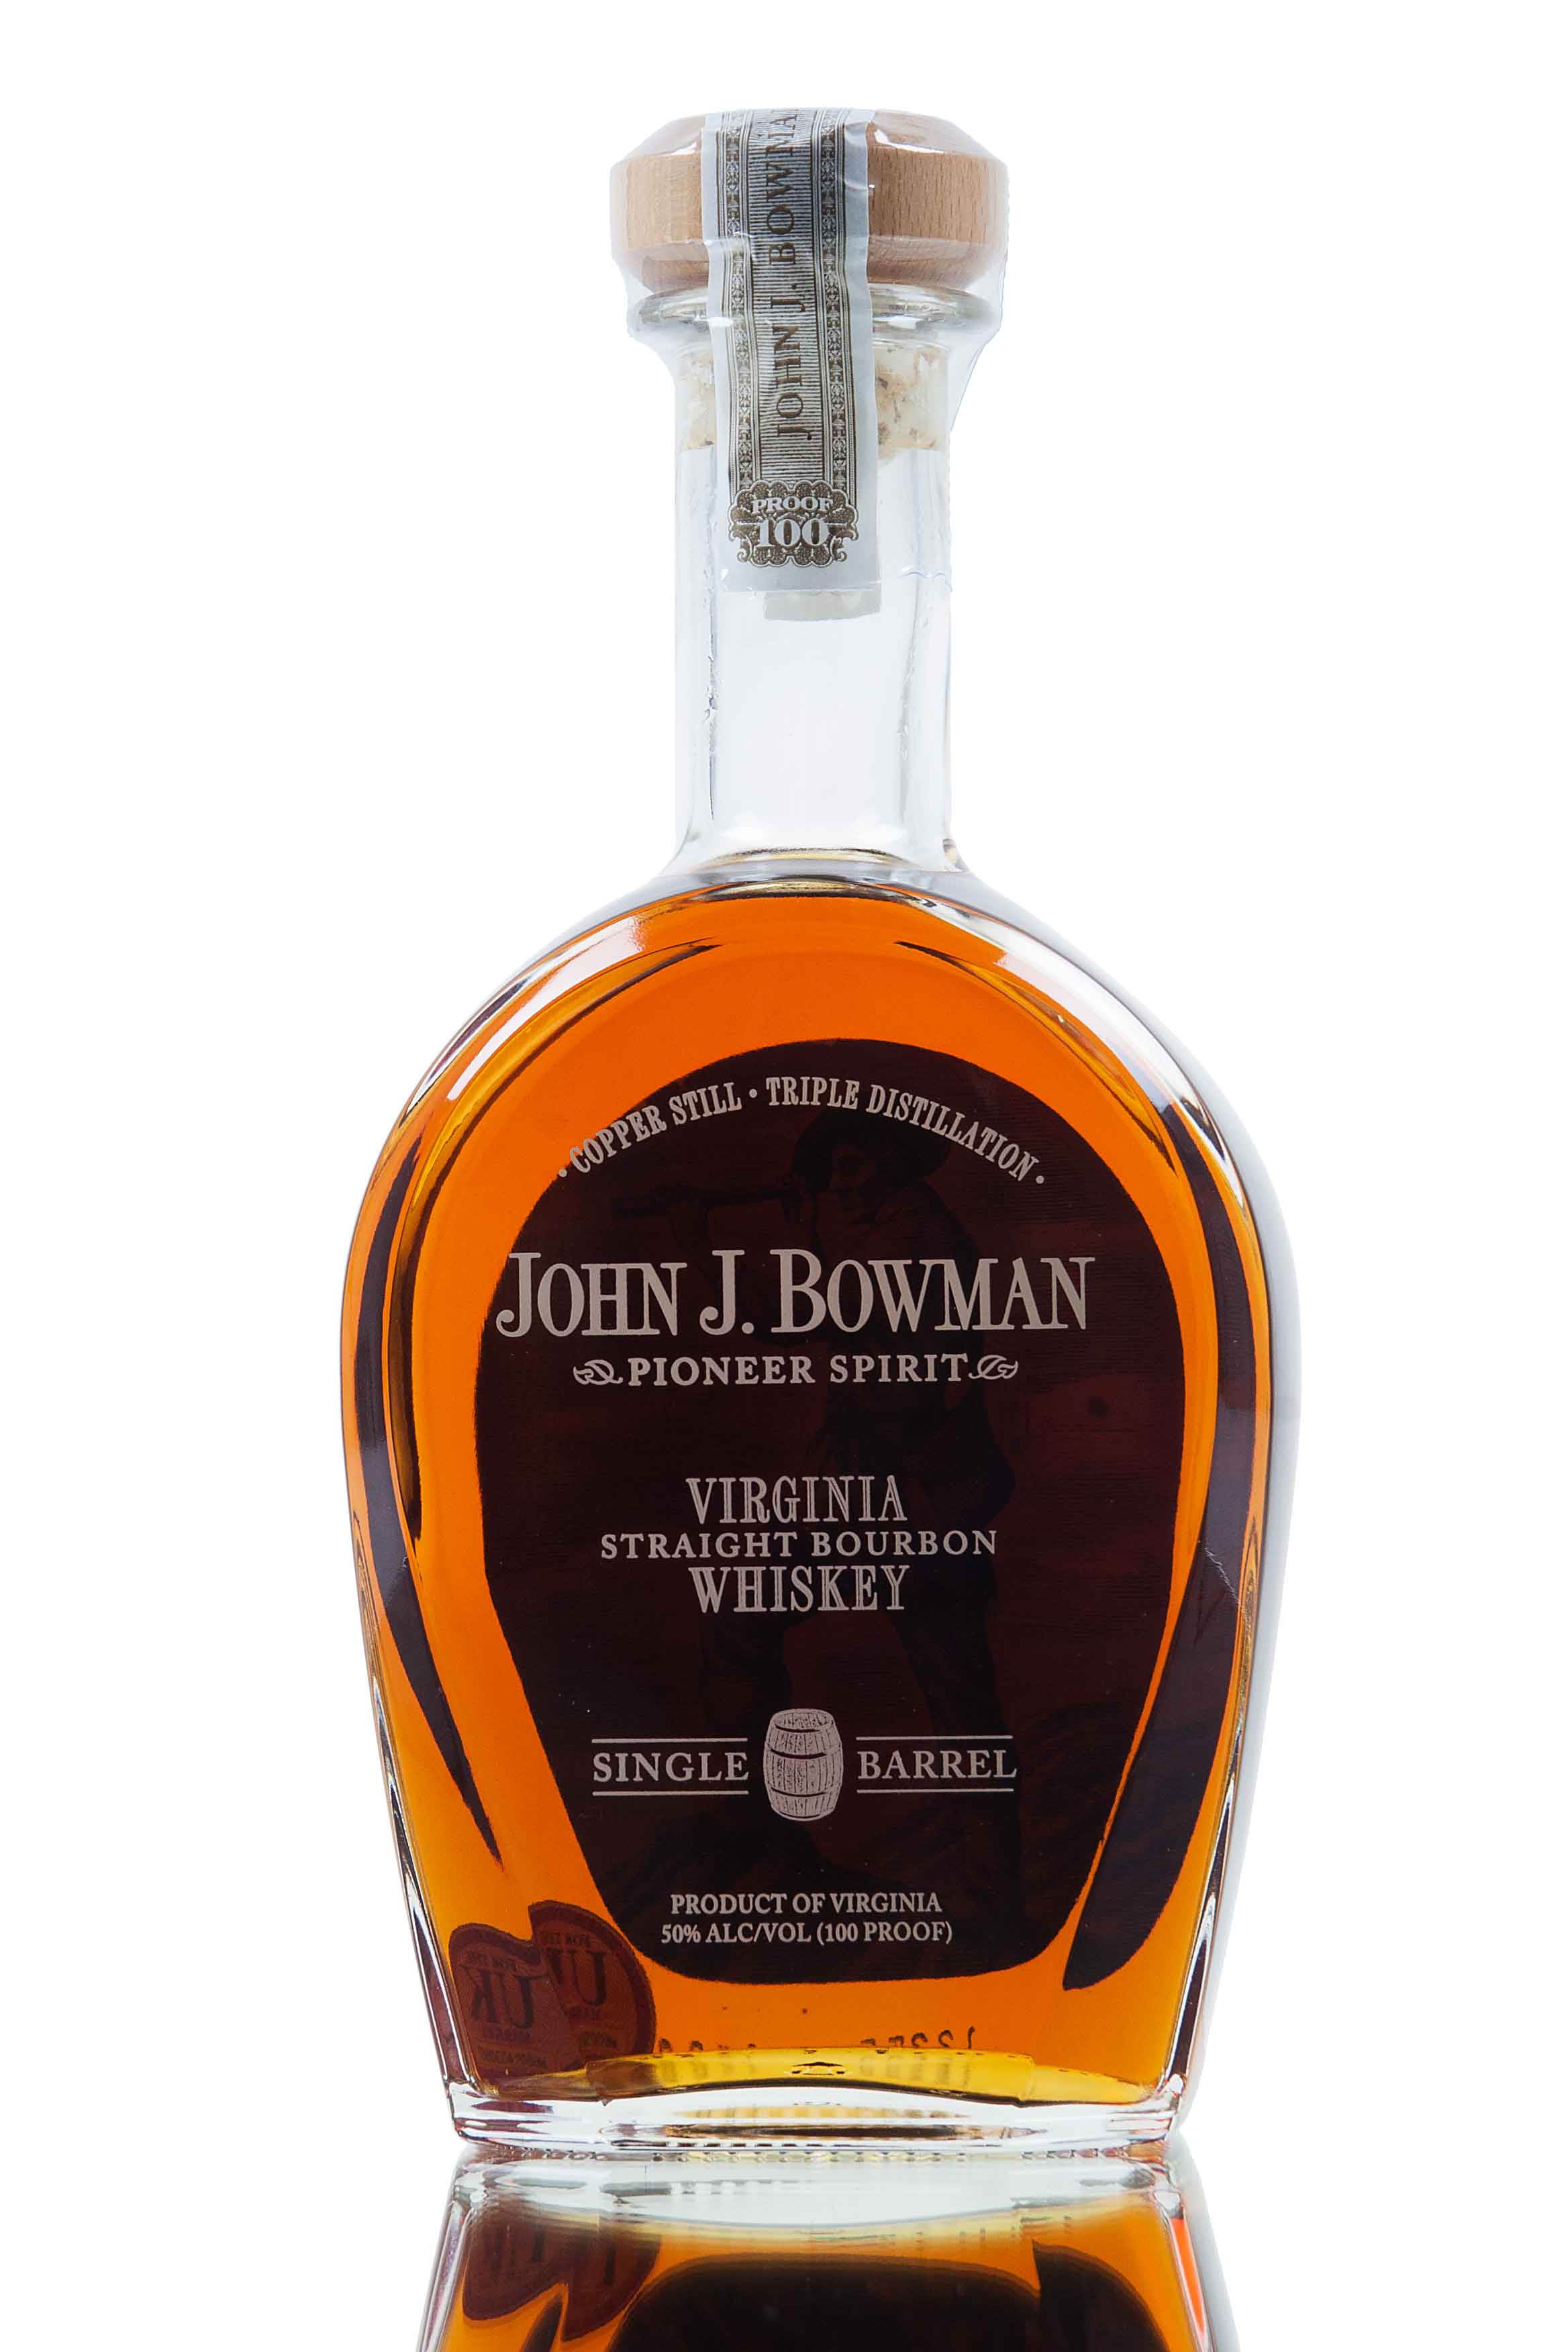 John J Bowman Single Barrel Bourbon Whiskey